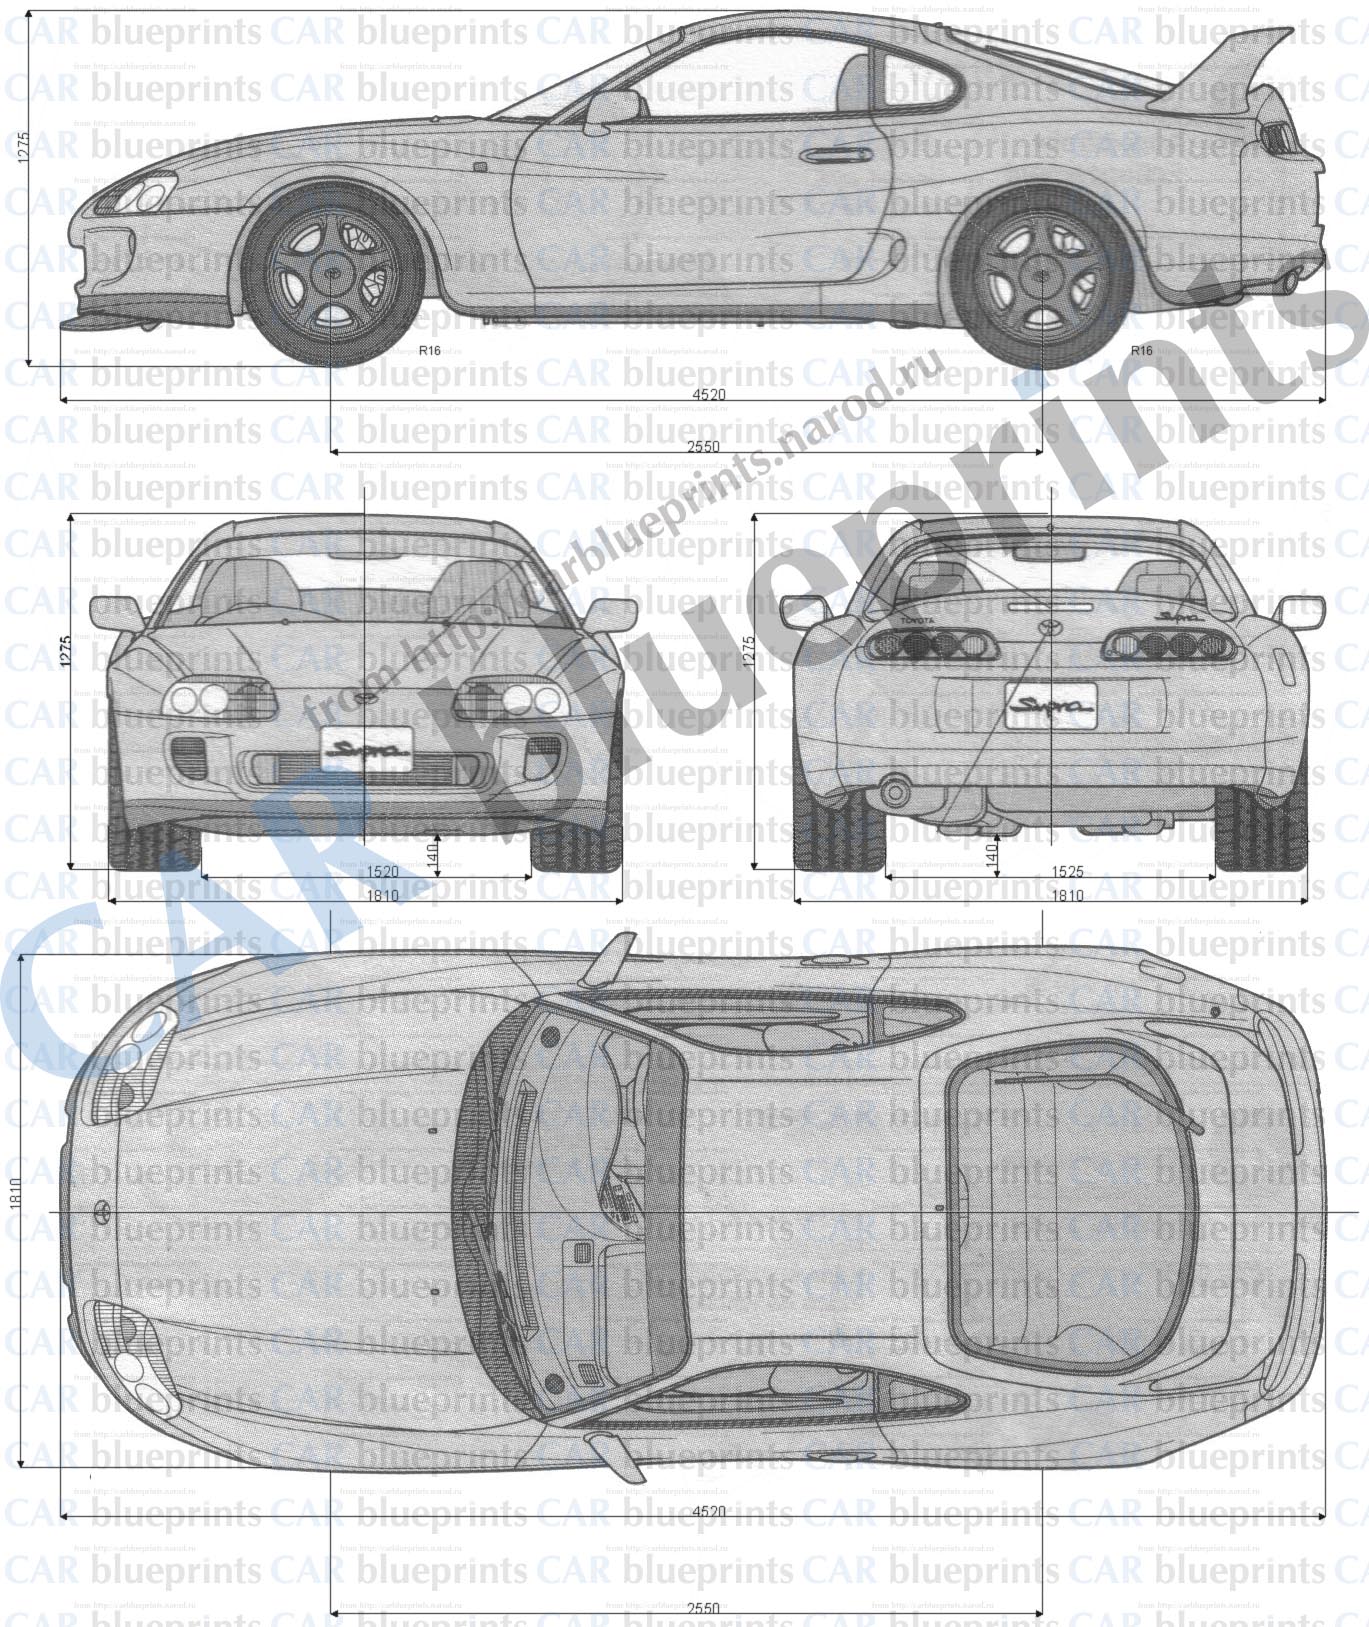 Toyota supra blueprints